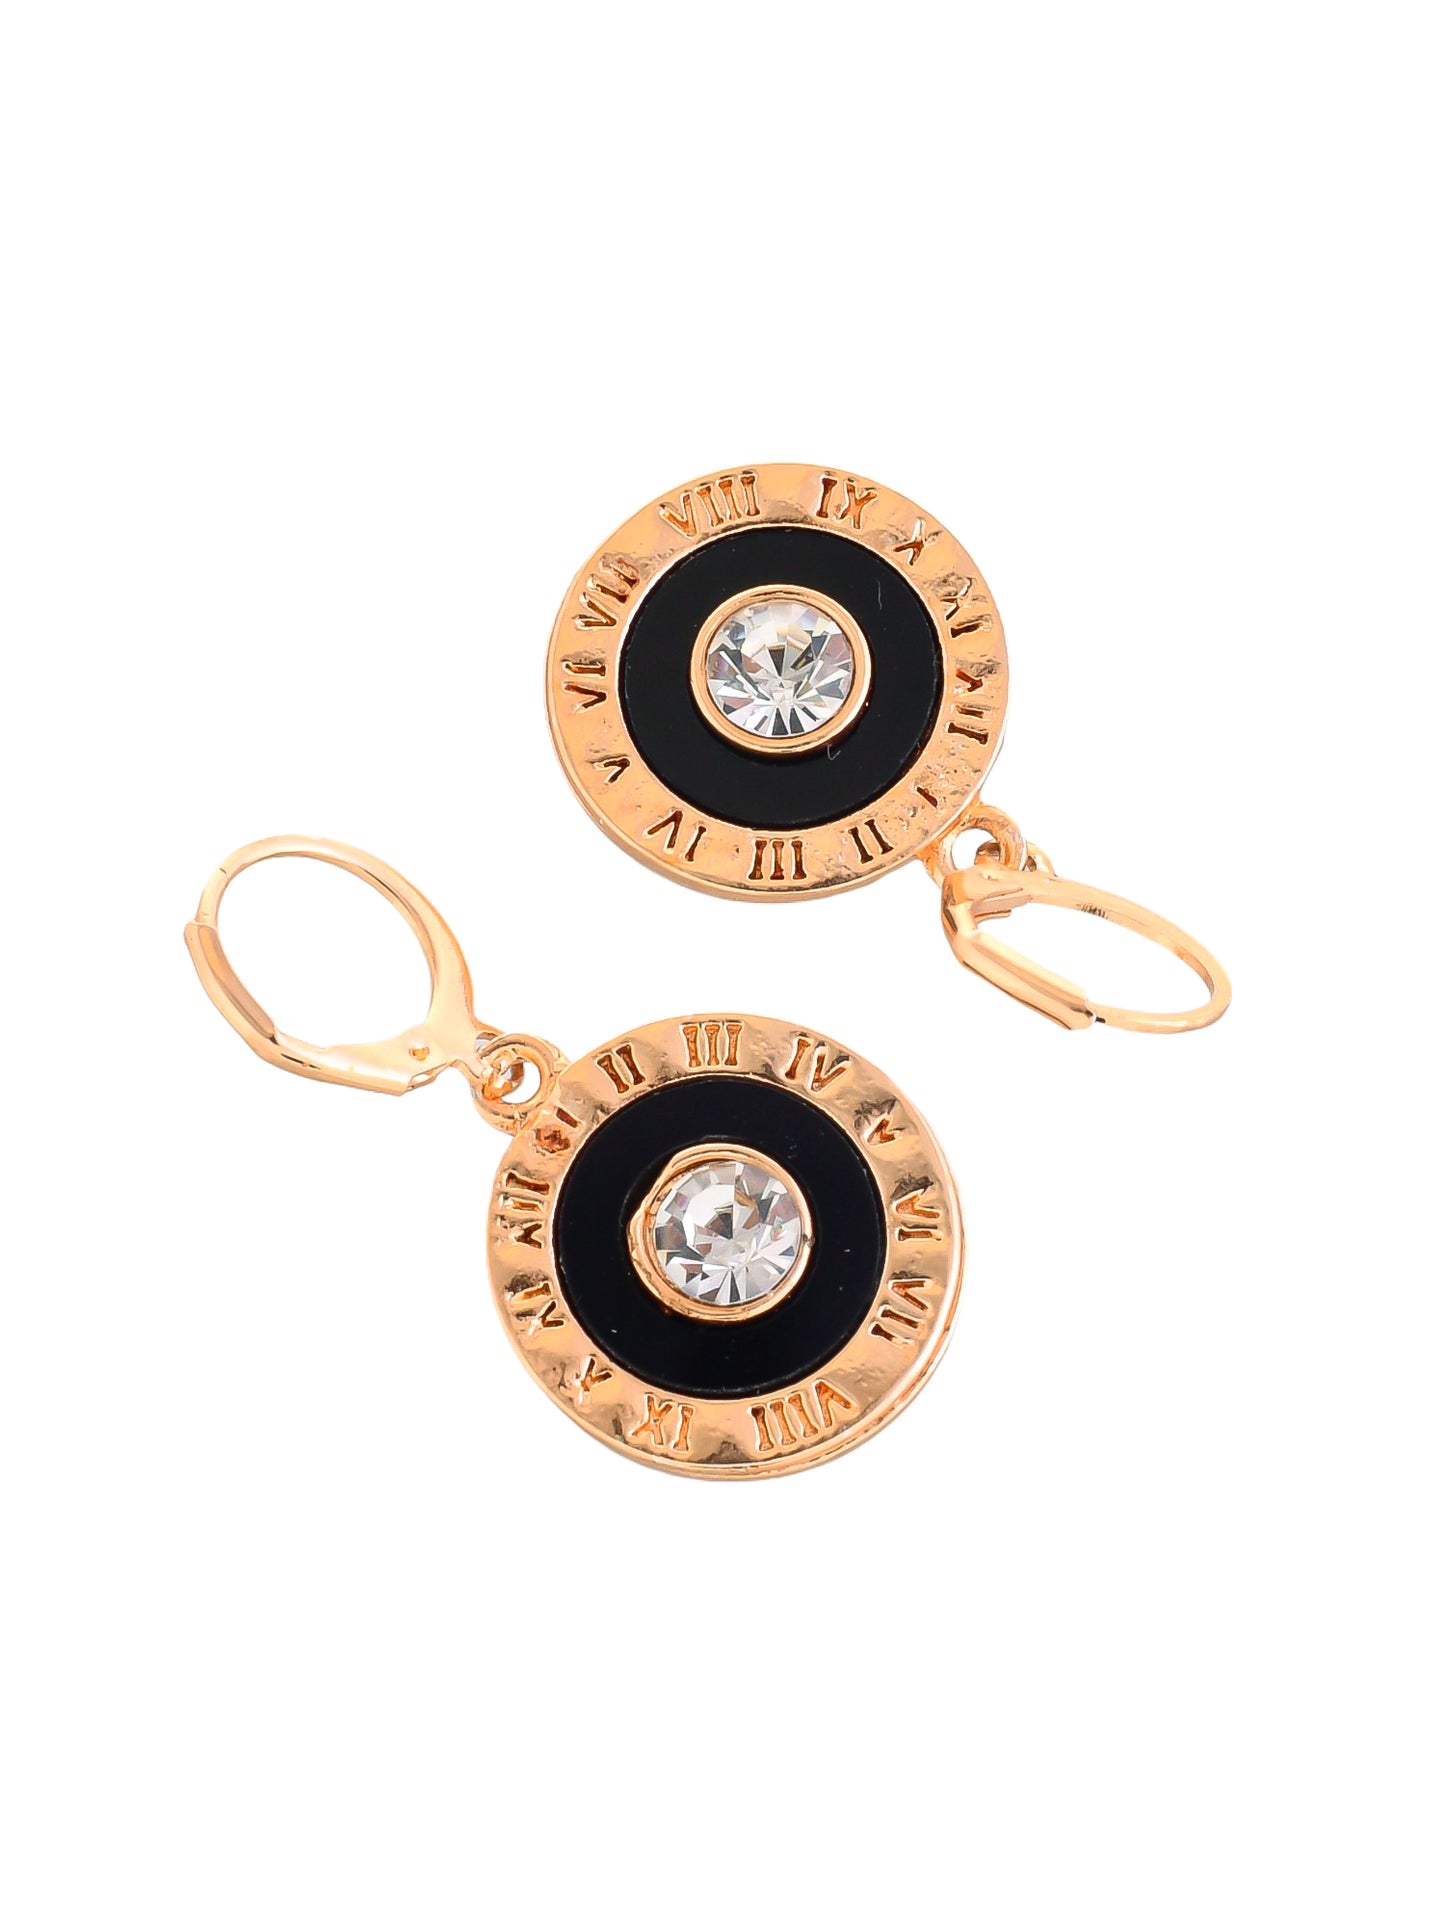 rose gold hoop earrings with white zircons and black enamel